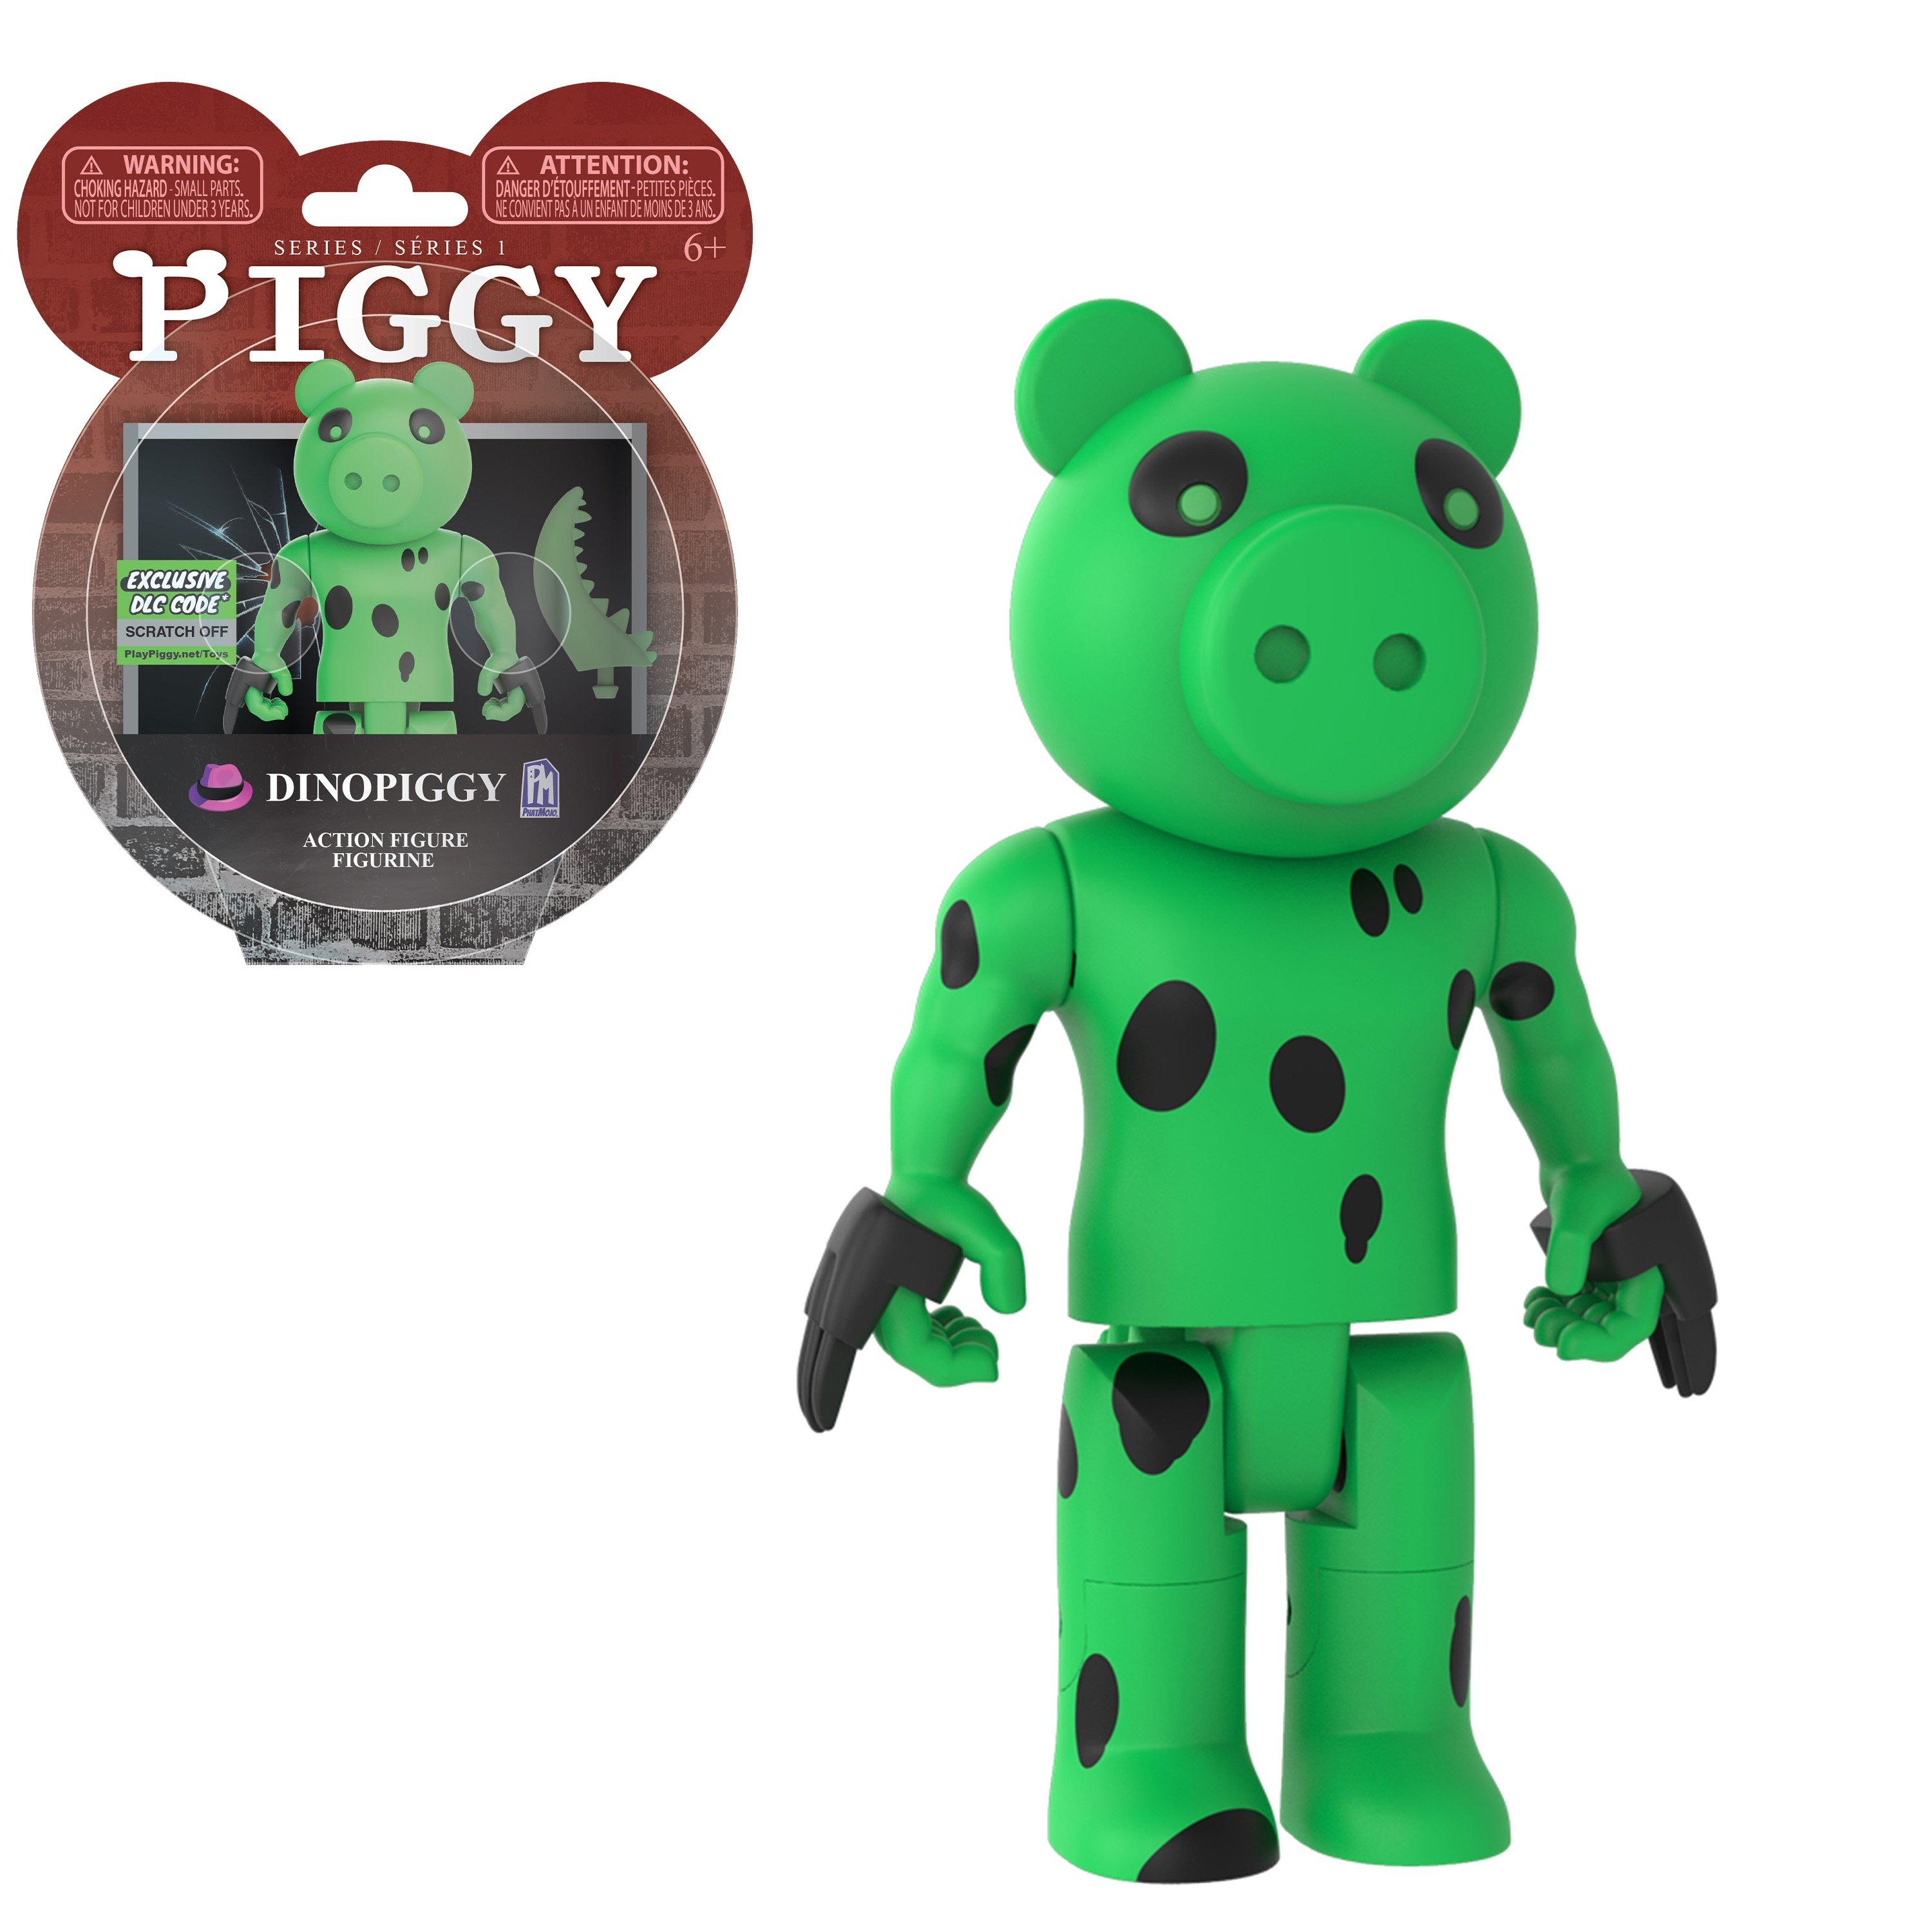 Piggy Dinopiggy Series 1 Action Figure Gamestop - make your own roblox action figure